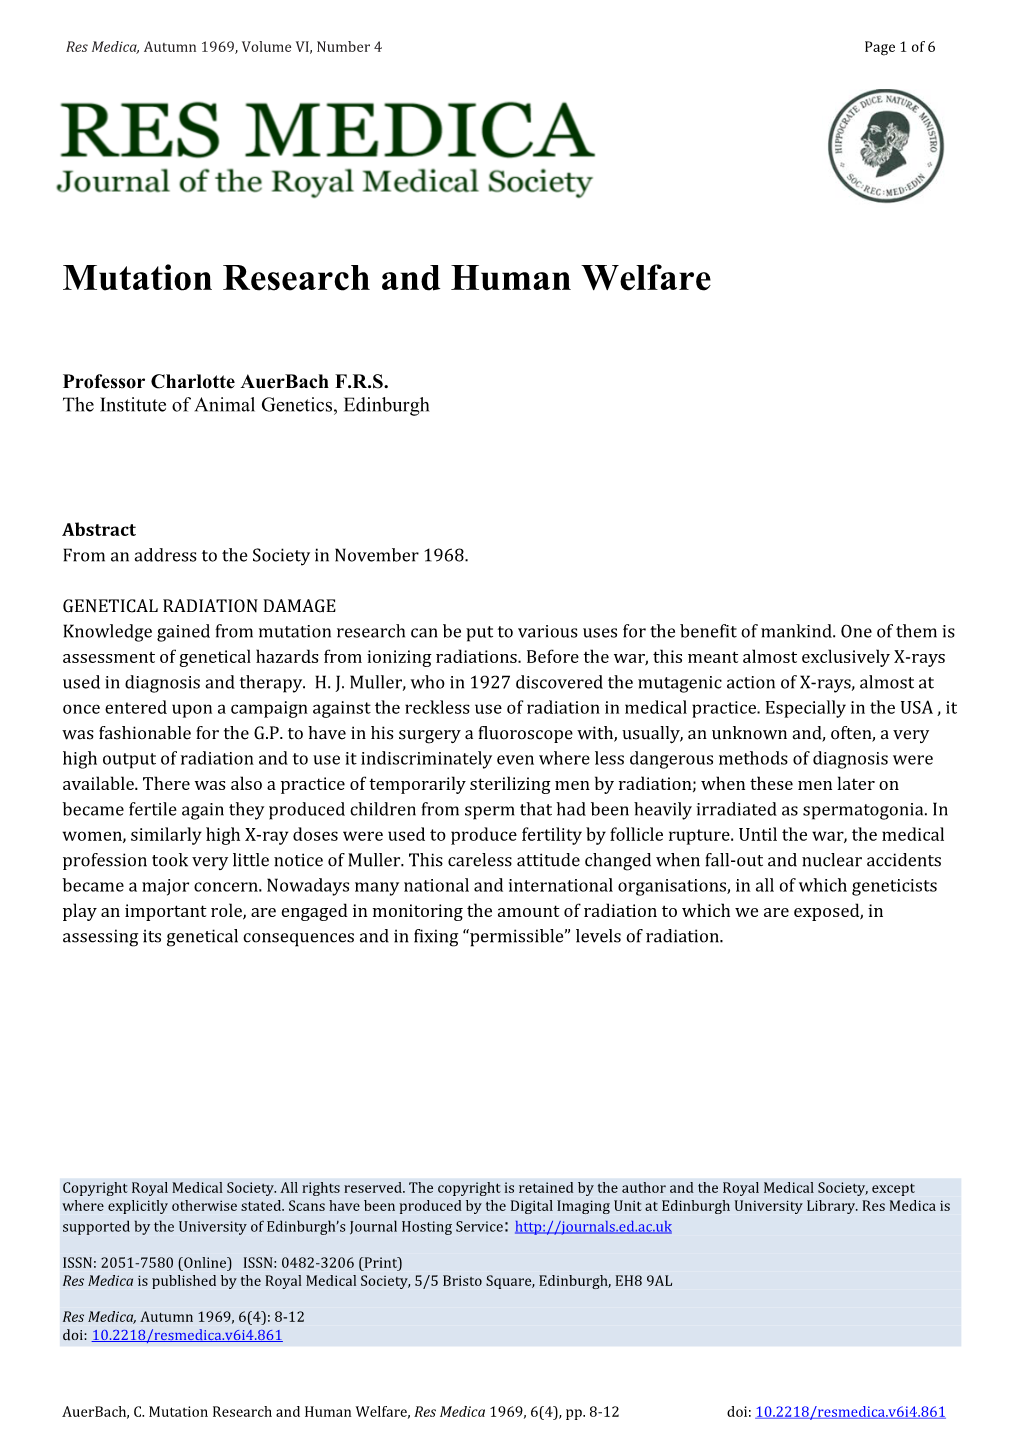 Mutation Research and Human Welfare